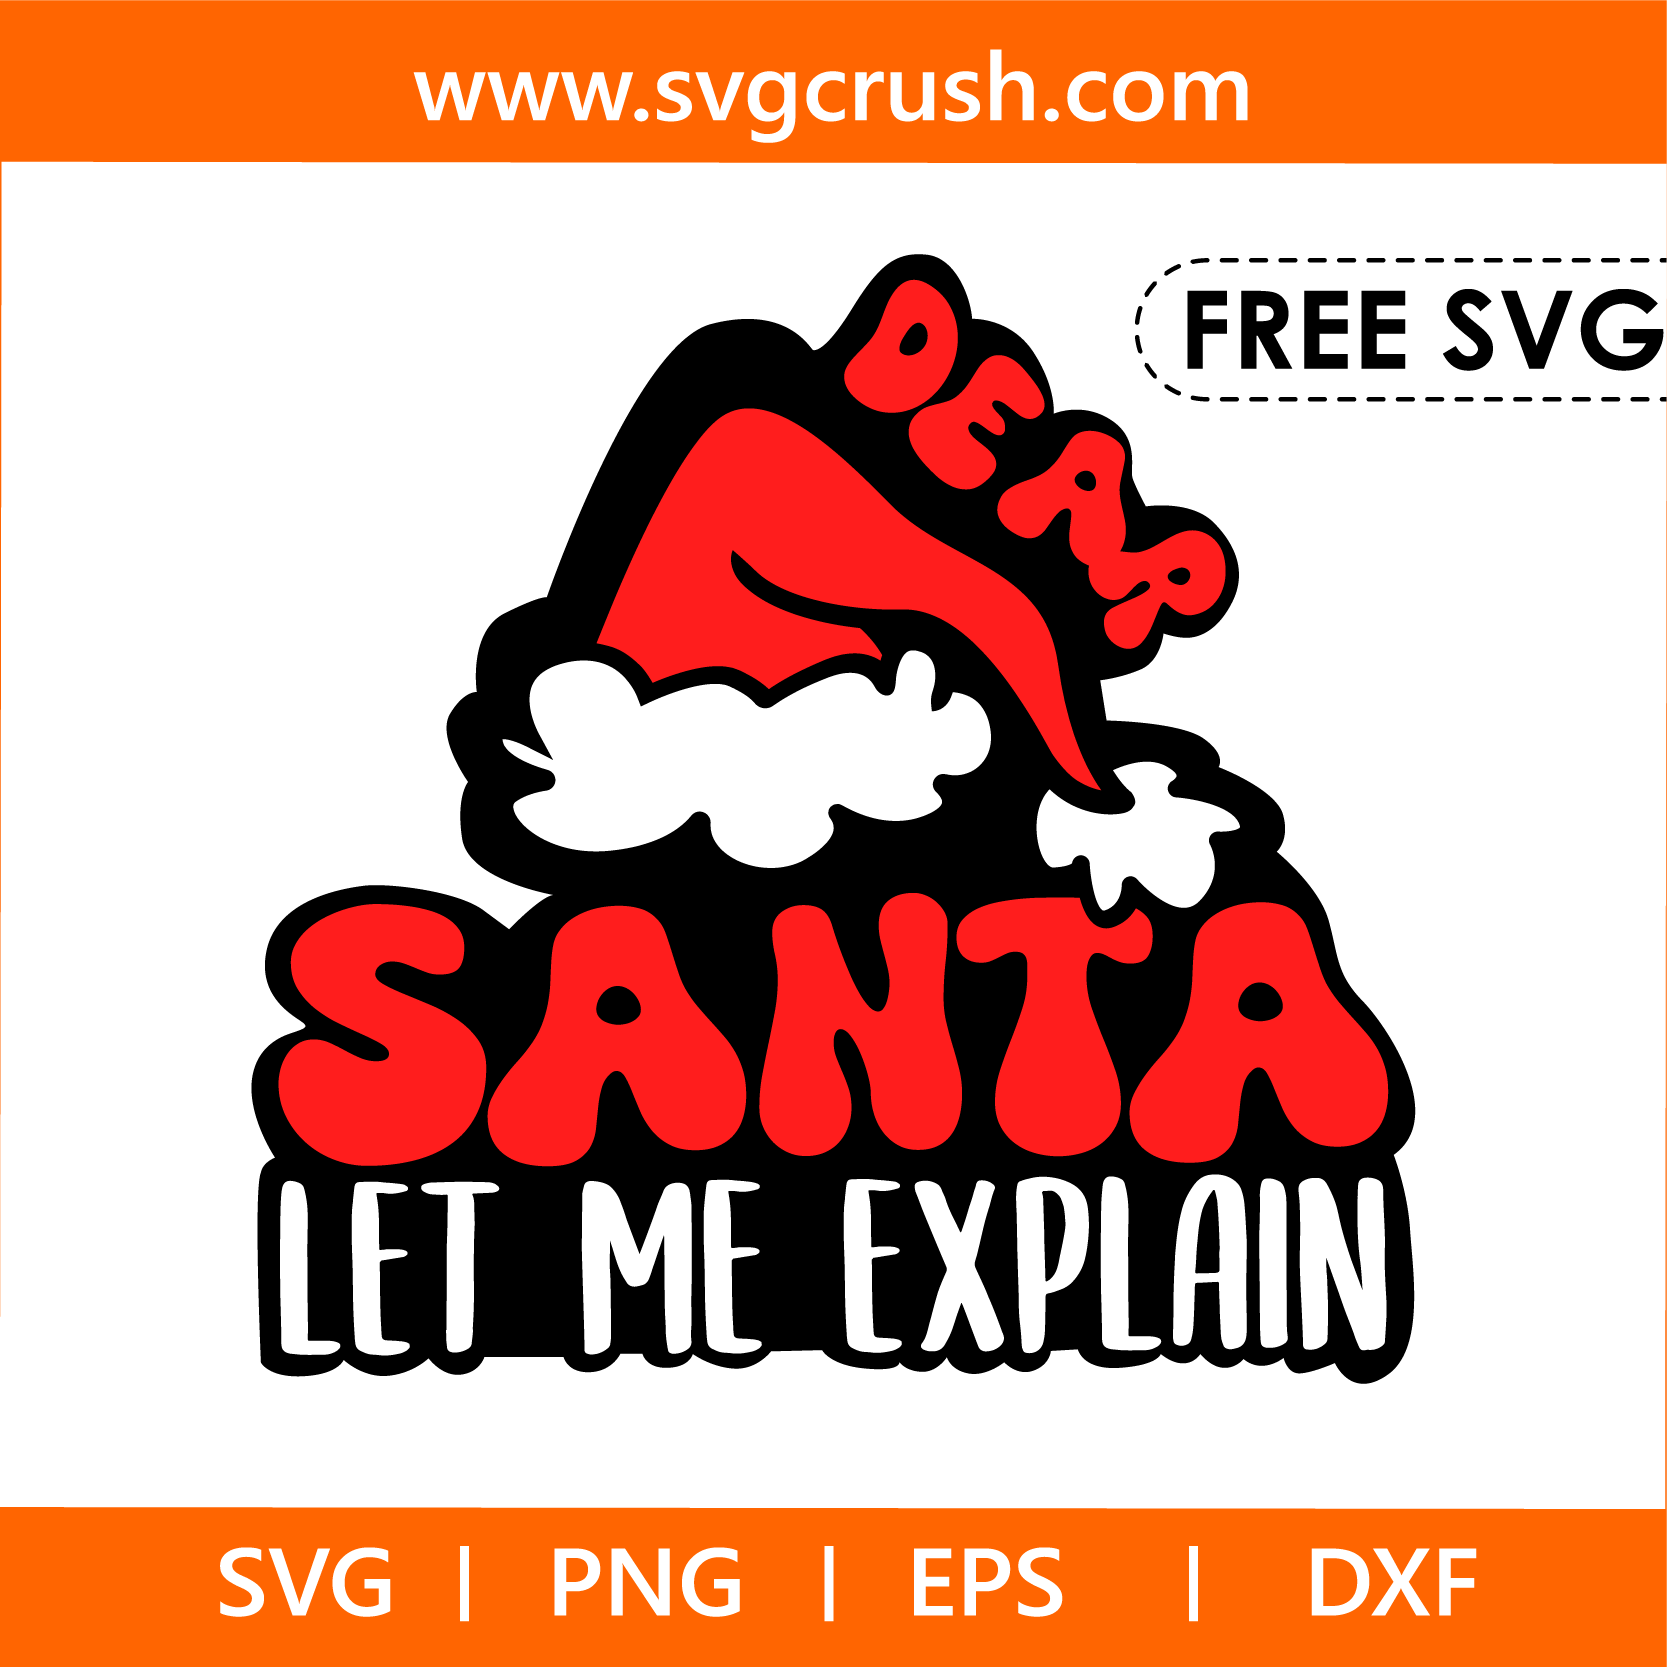 free dear-santa-let-me-explain-006 svg